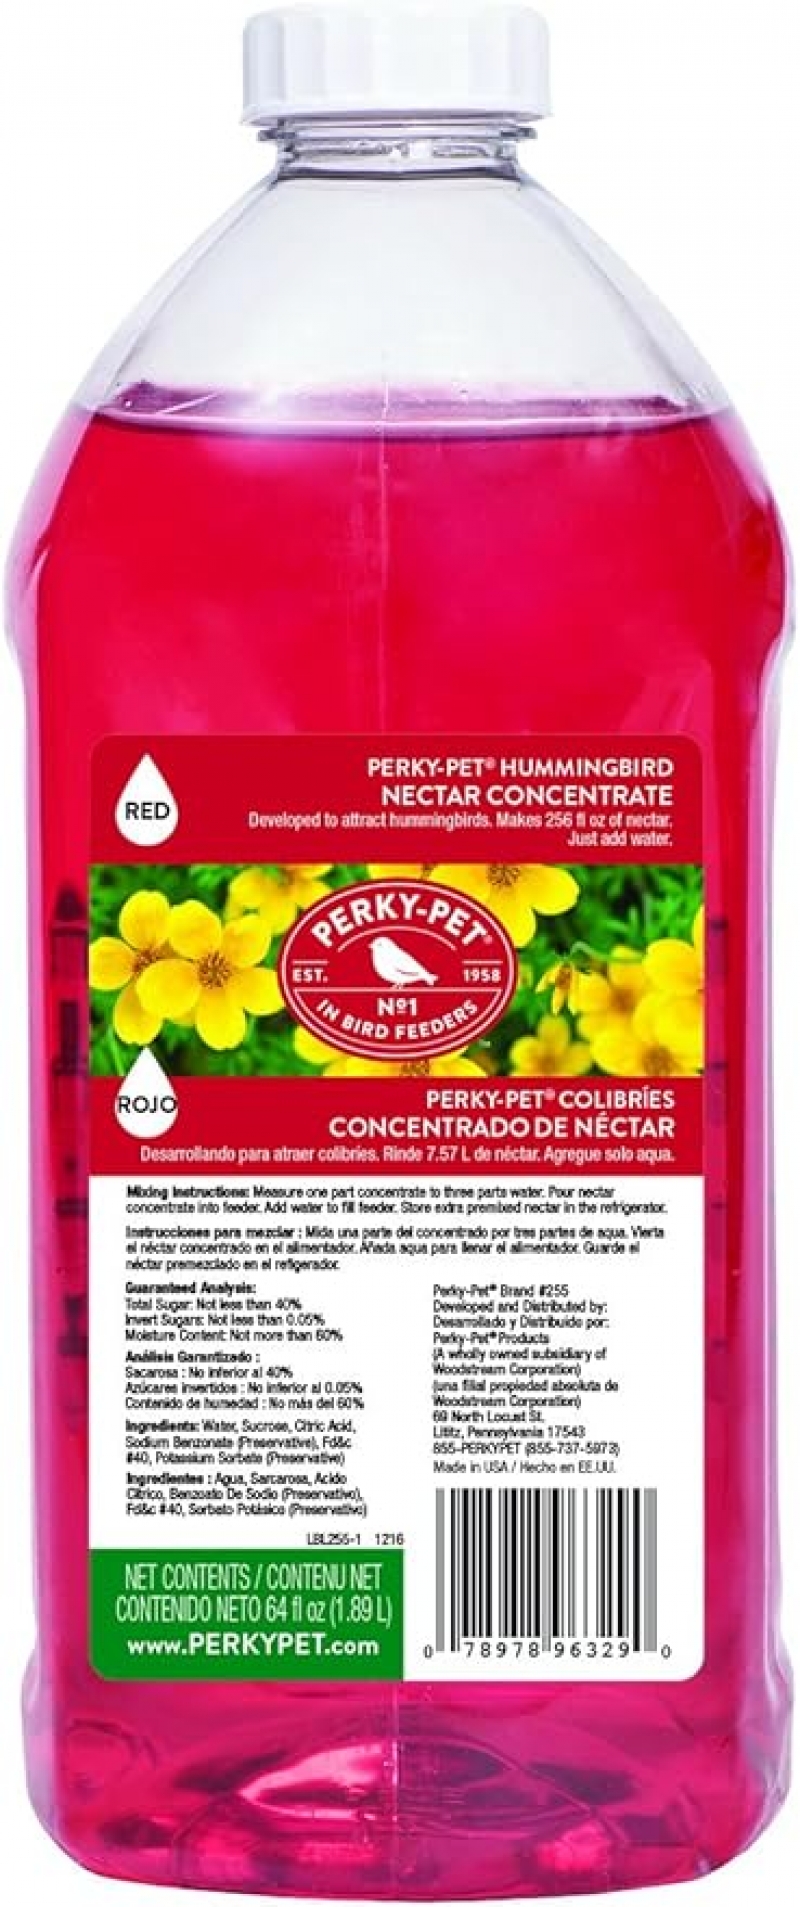 ihocon: Perky-Pet 255 Hummingbird Nectar Liquid Concentrate - Makes 256 Oz of Hummingbird Nectar 濃縮蜂鳥花蜜 64 Oz (可稀釋成 256 oz 蜂鳥花蜜)